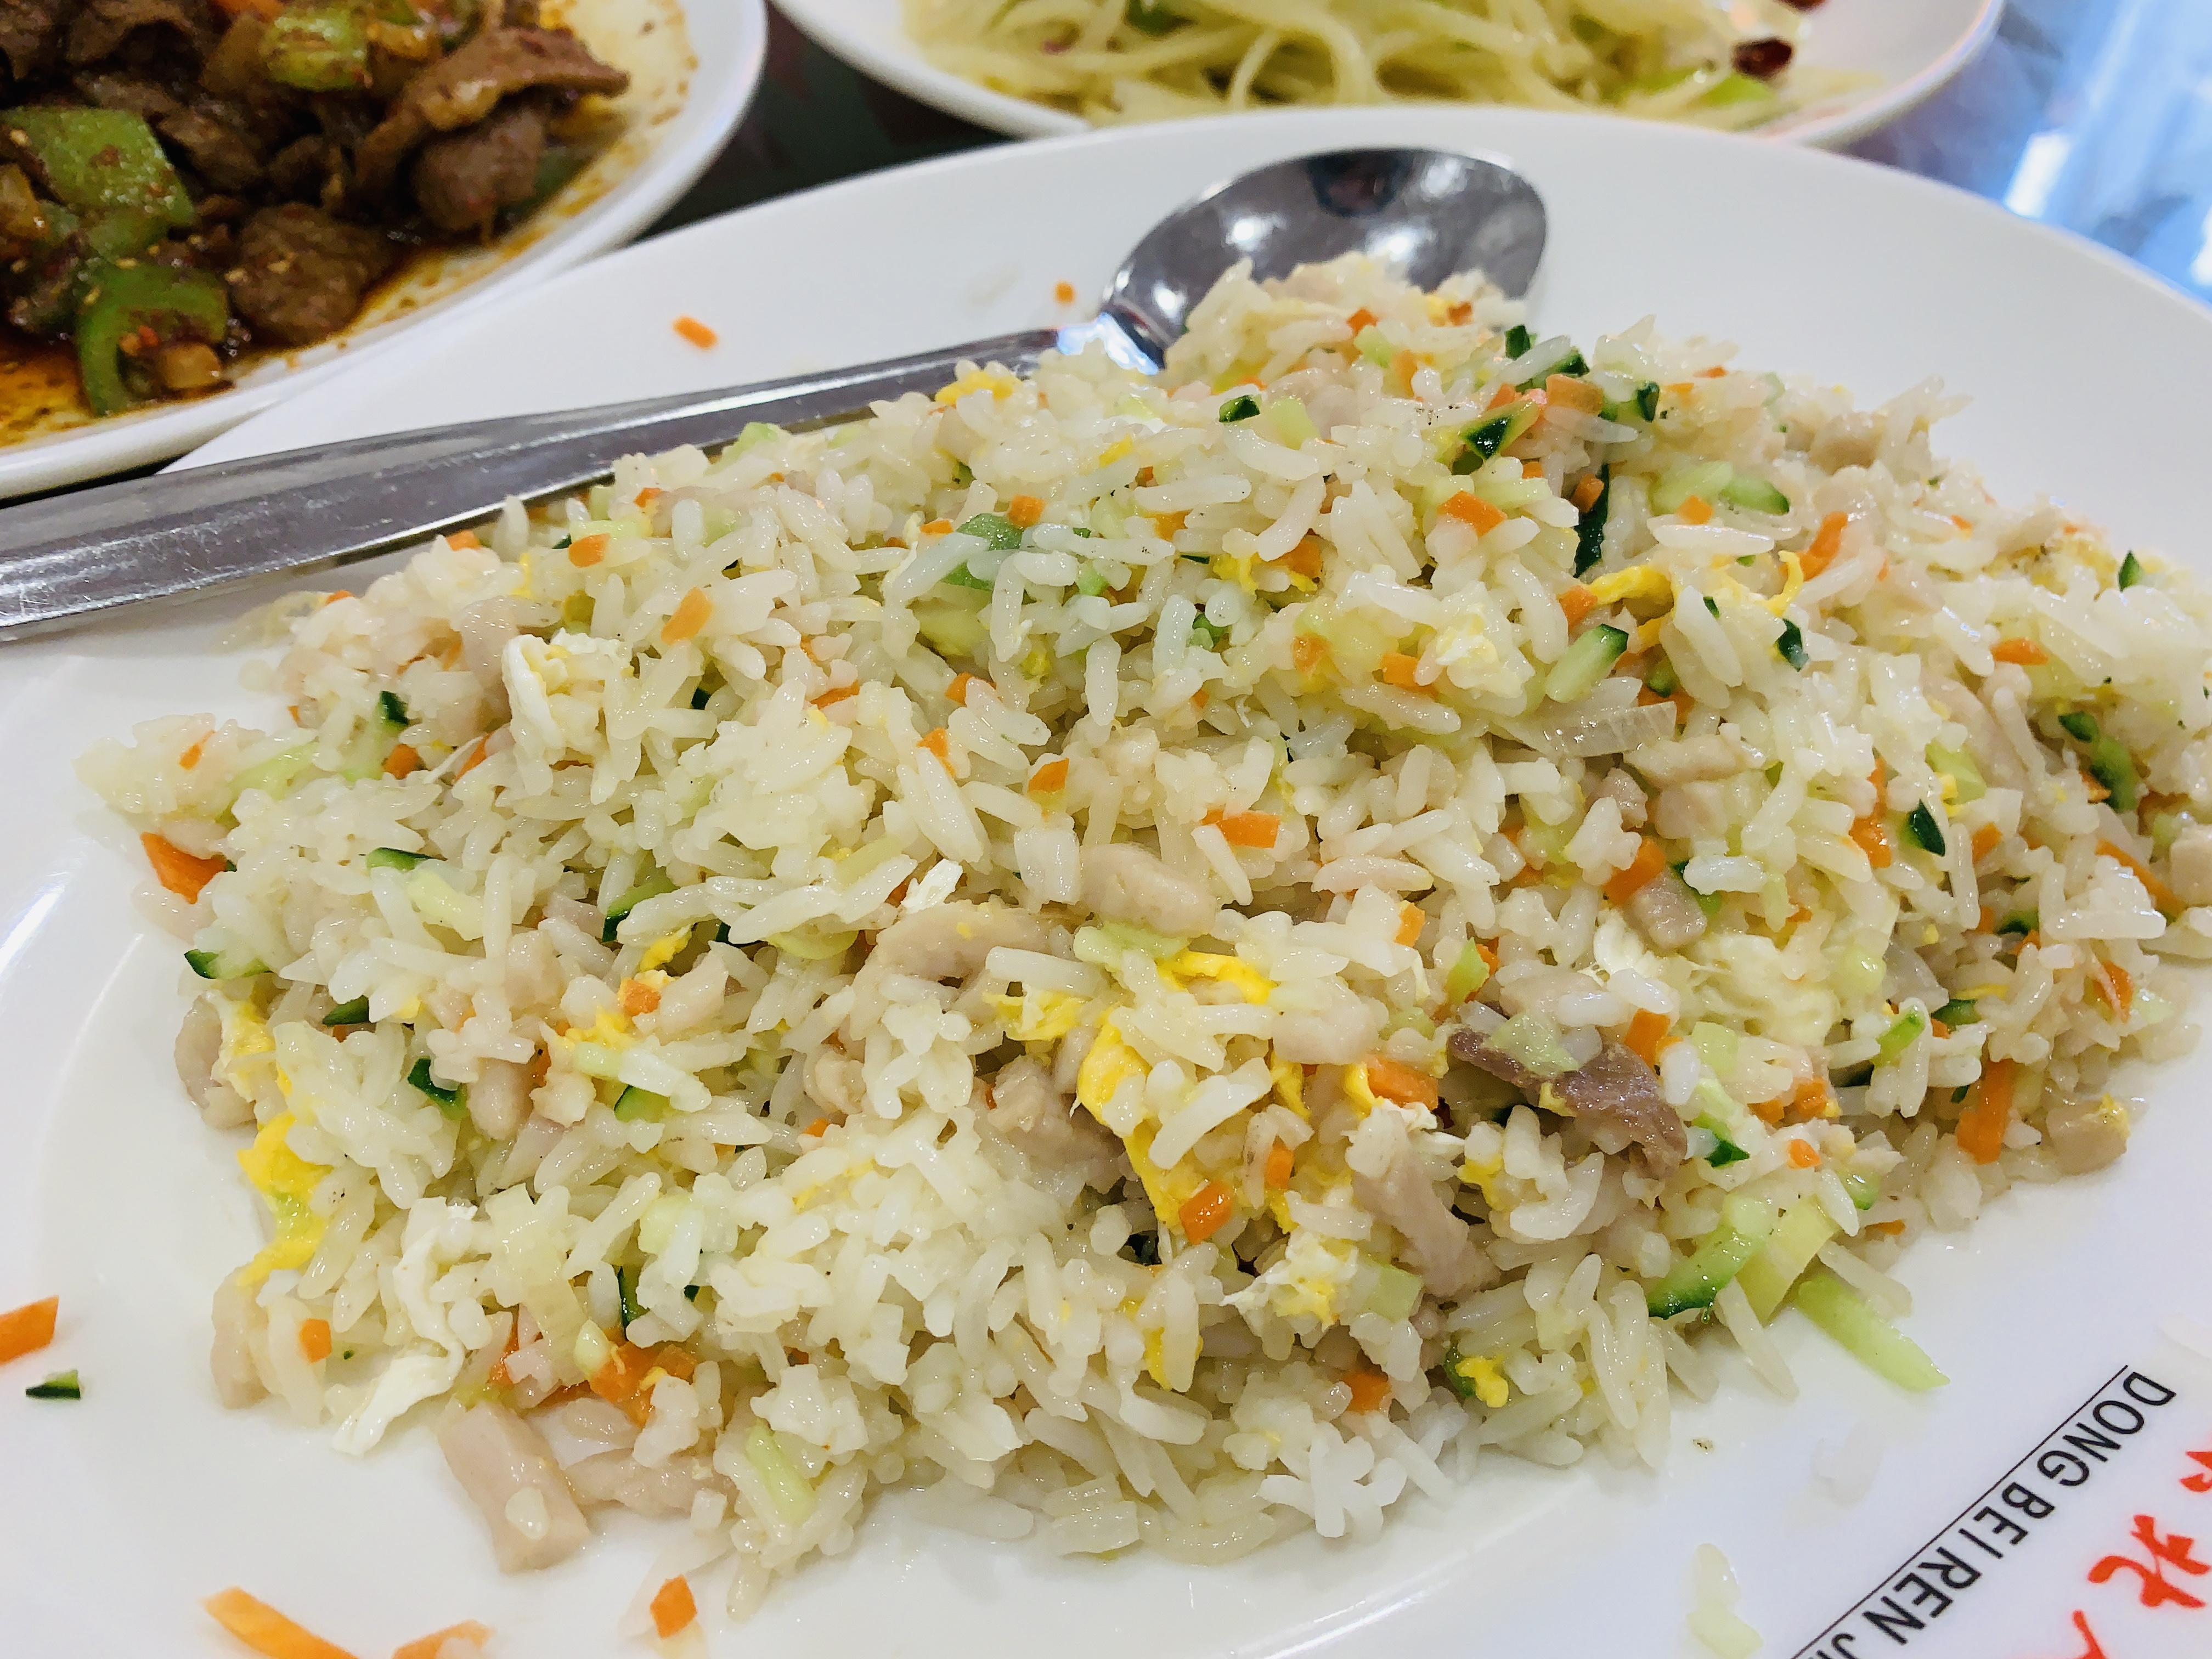 Dong Bei Ren Jia - Northeastern Chinese Fried Rice